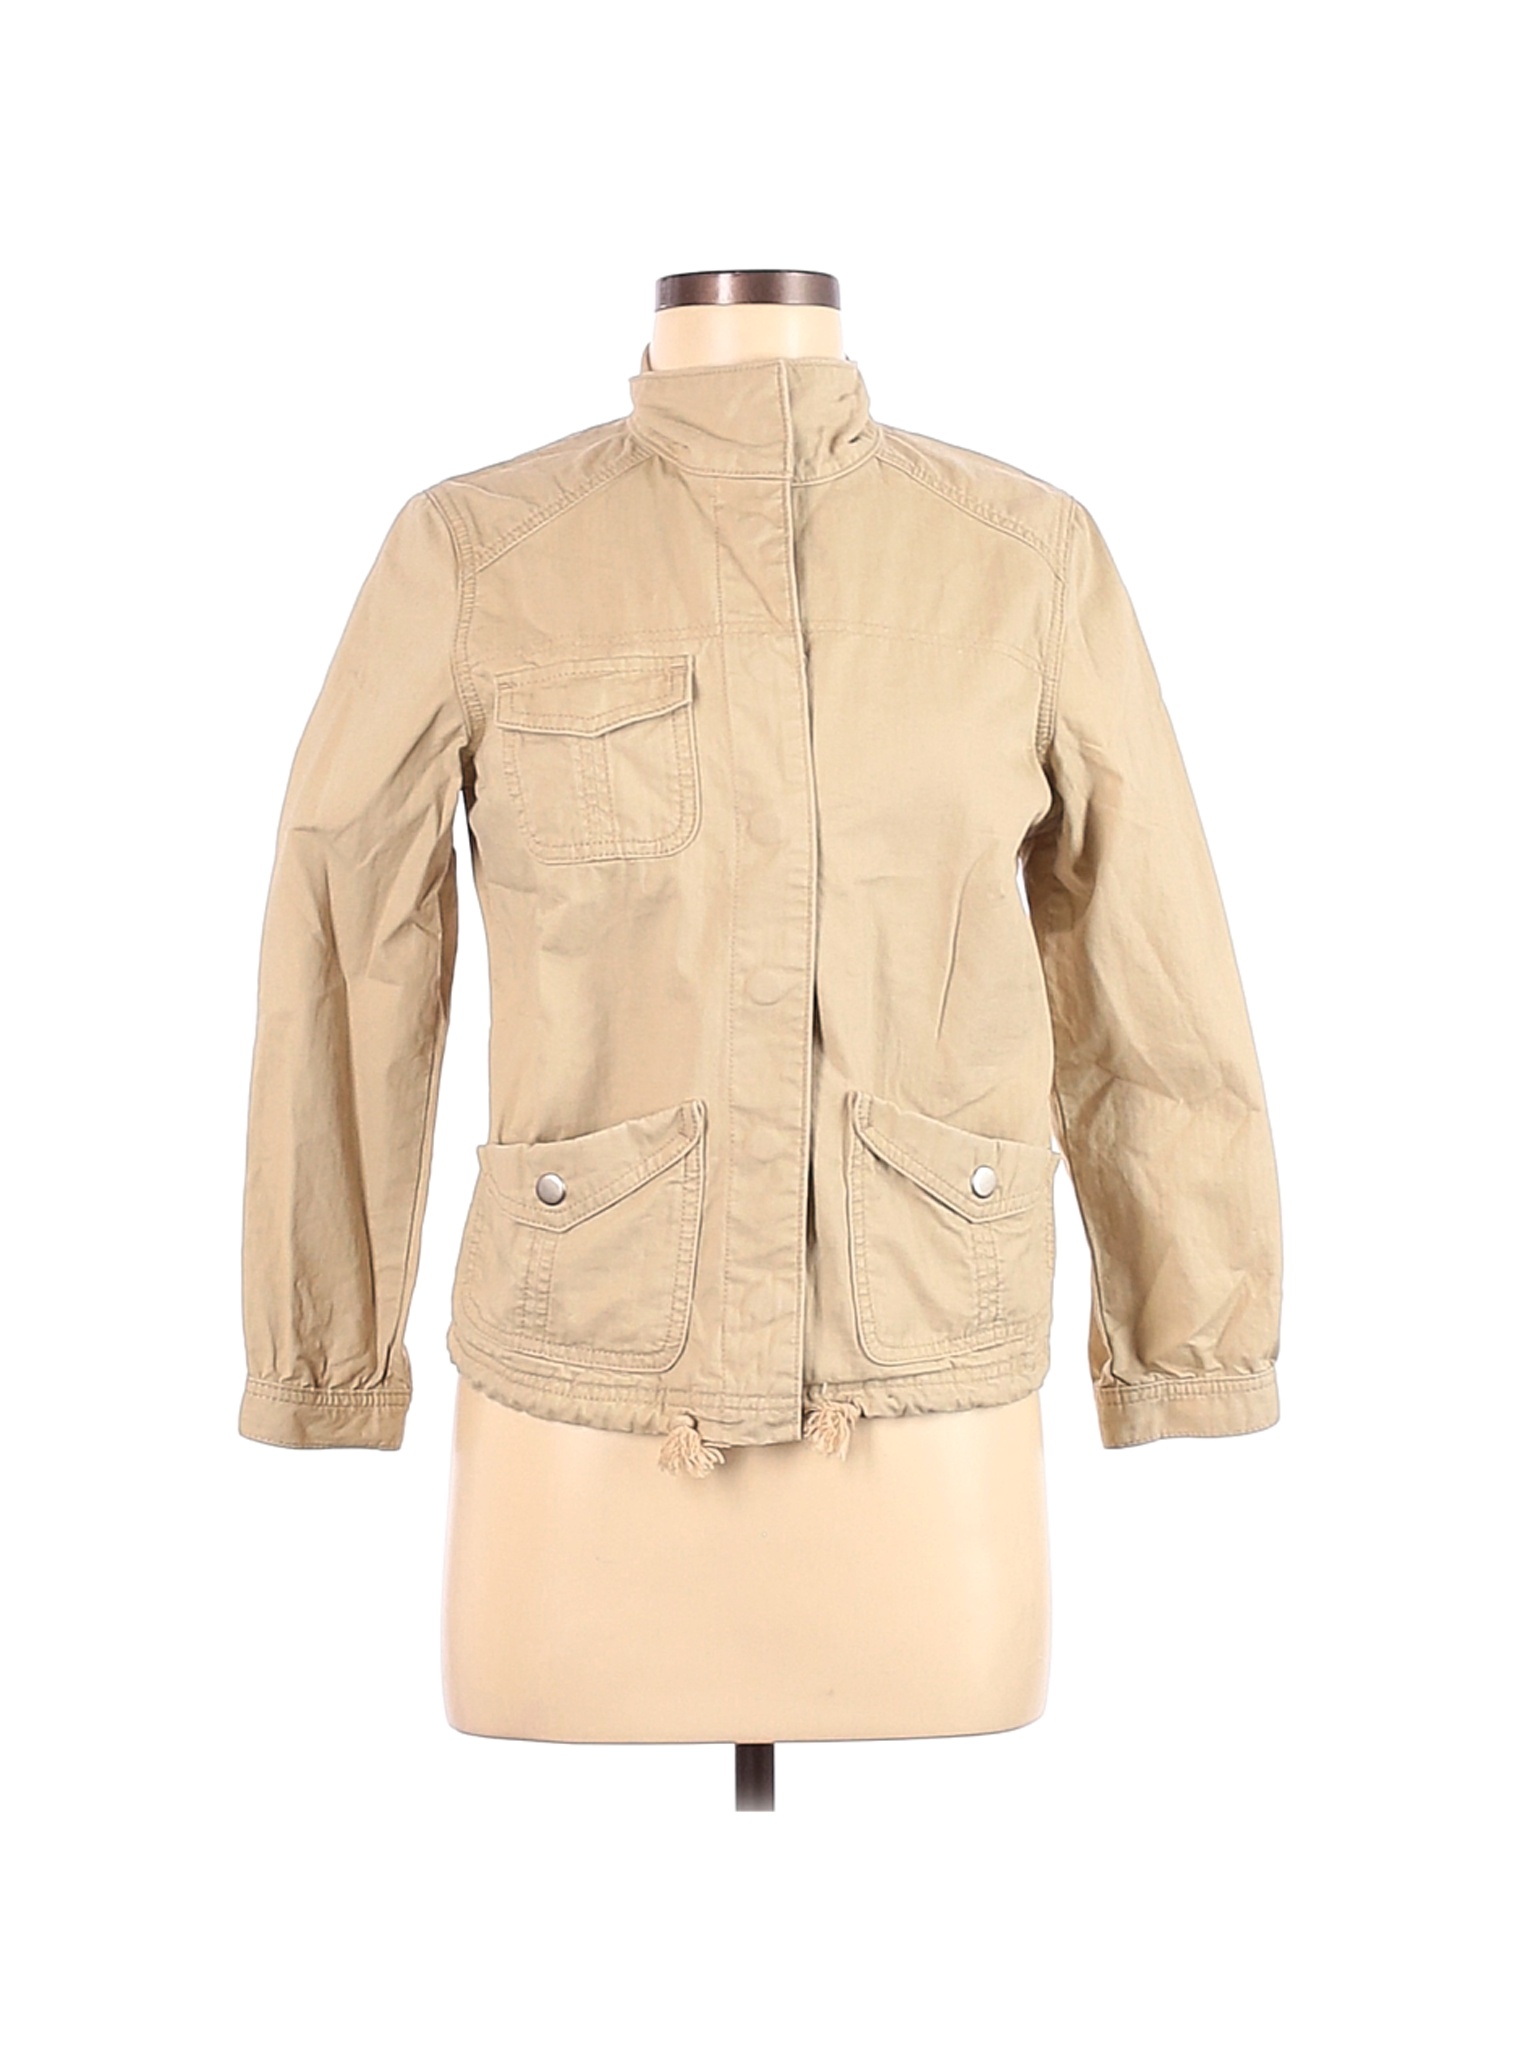 Levi's Women Brown Jacket S | eBay